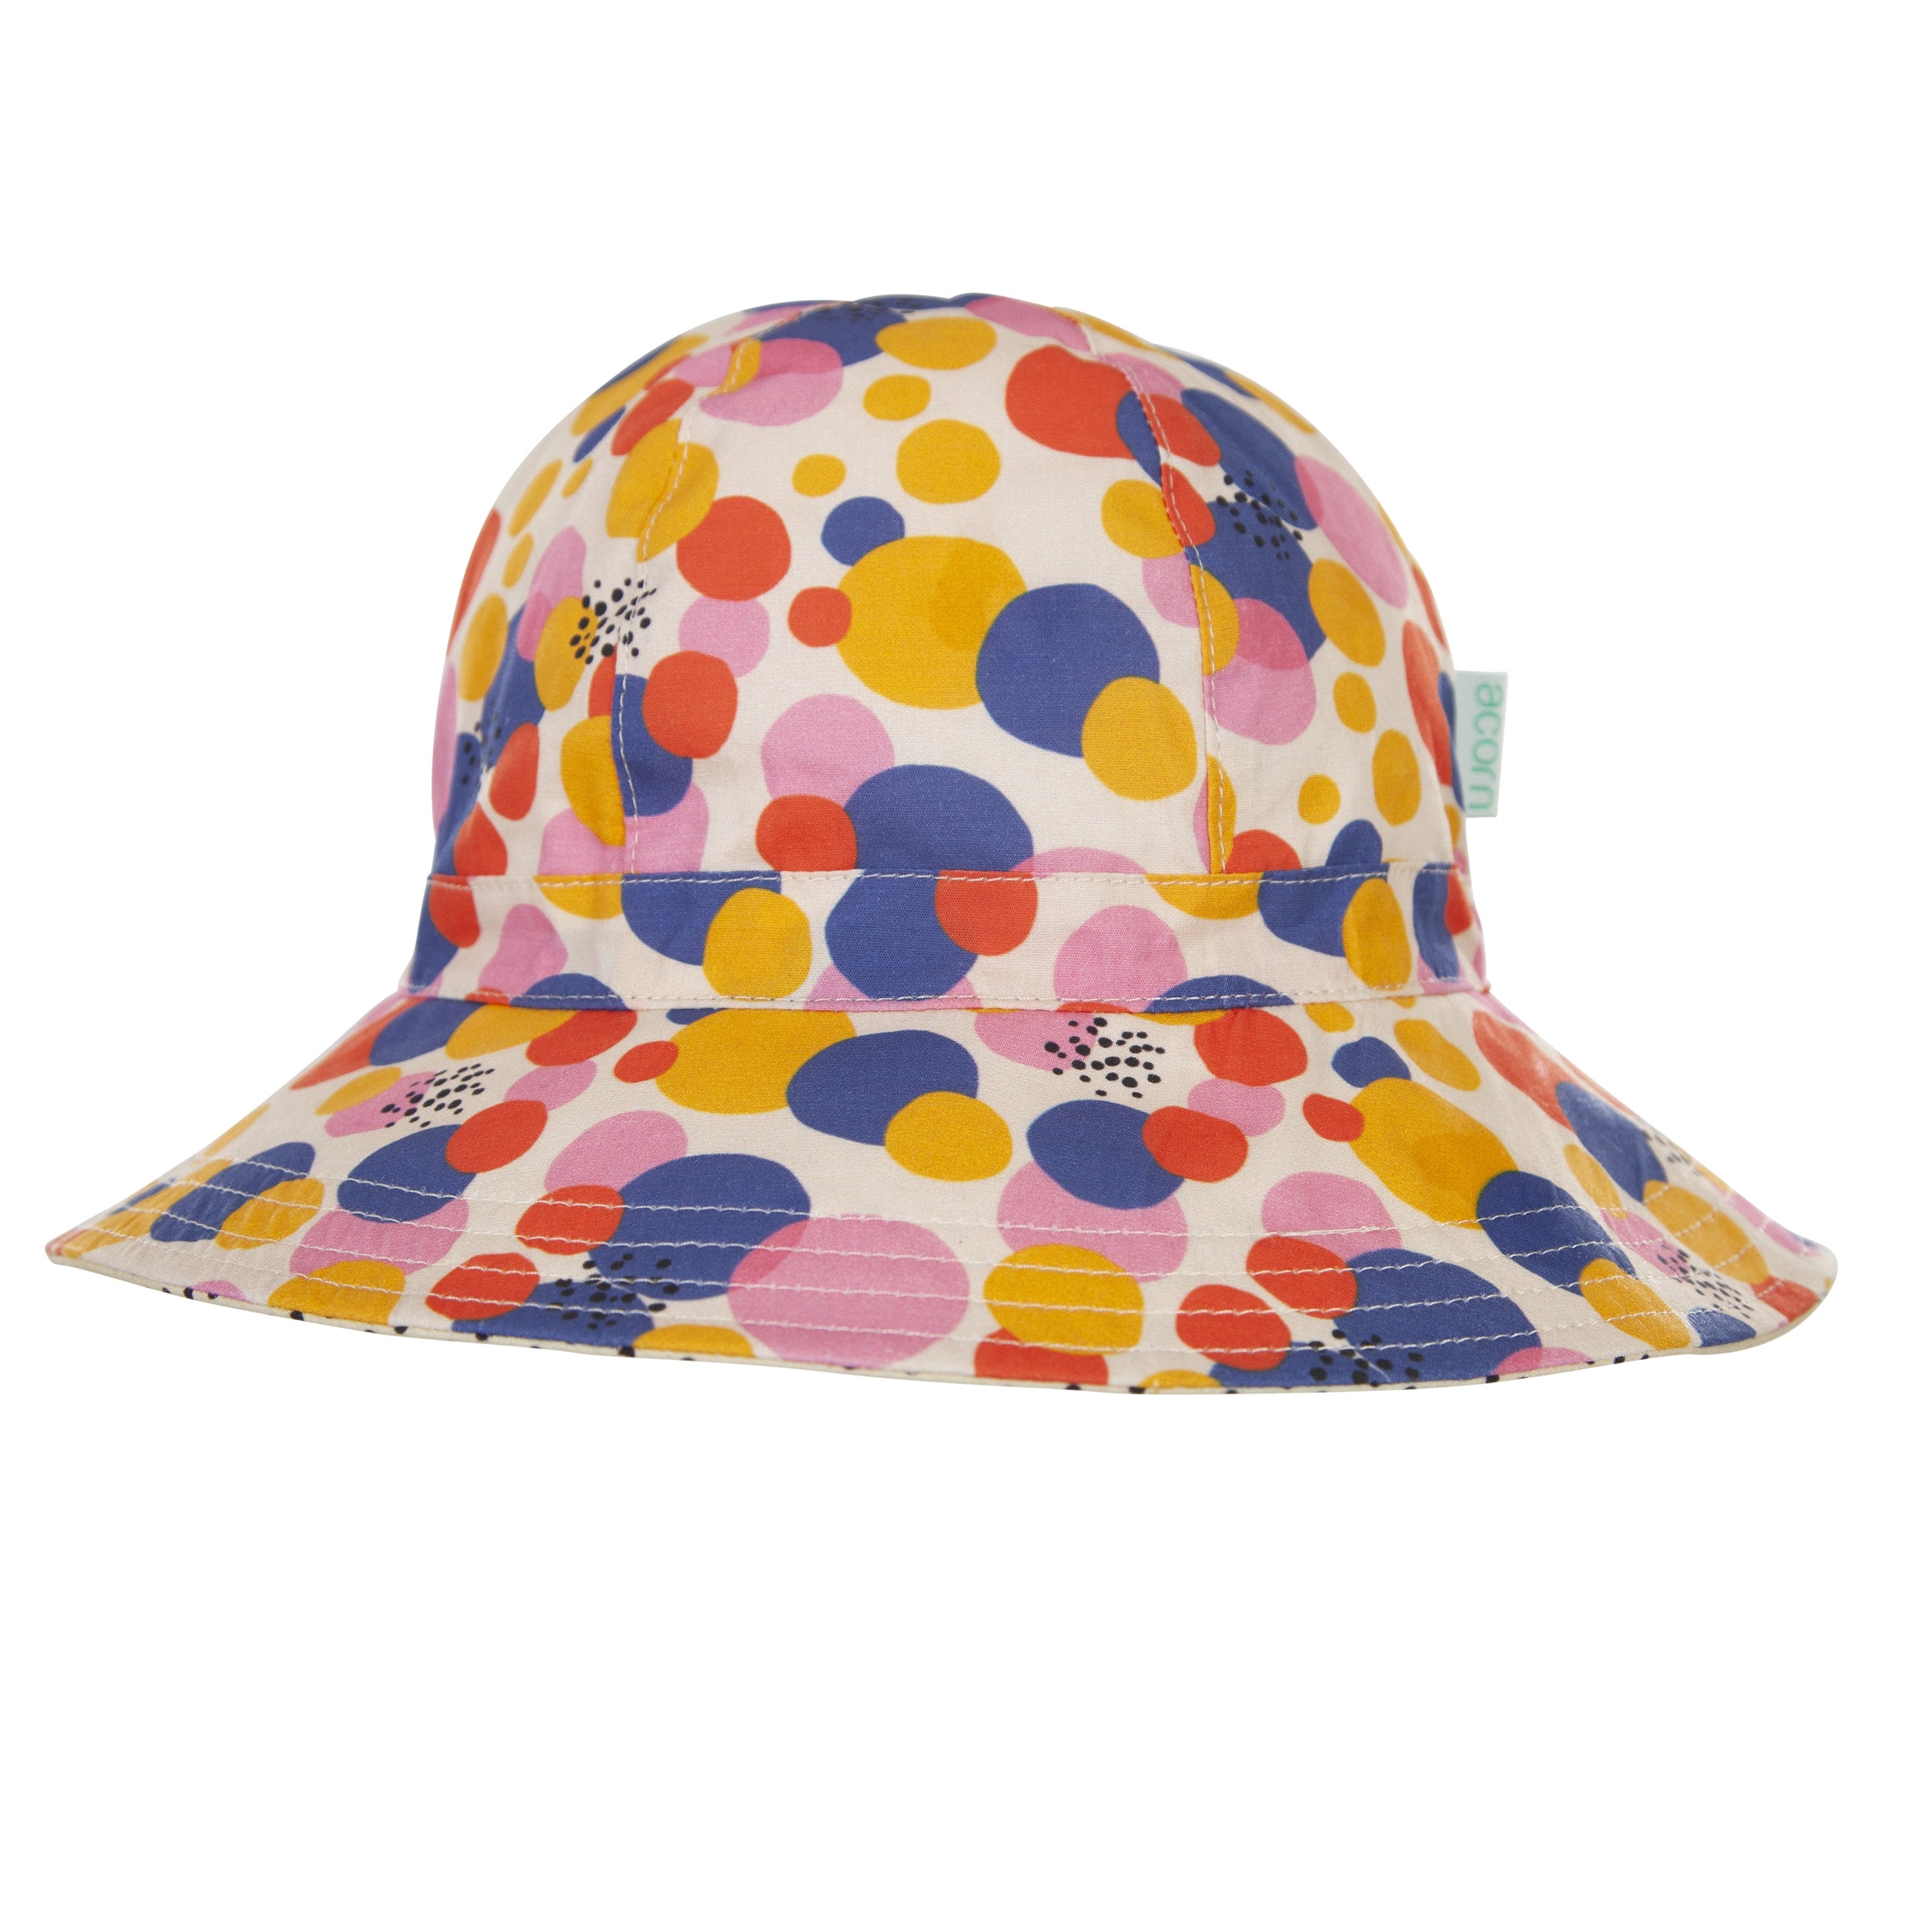 Acorn - Confetti Floppy Hat